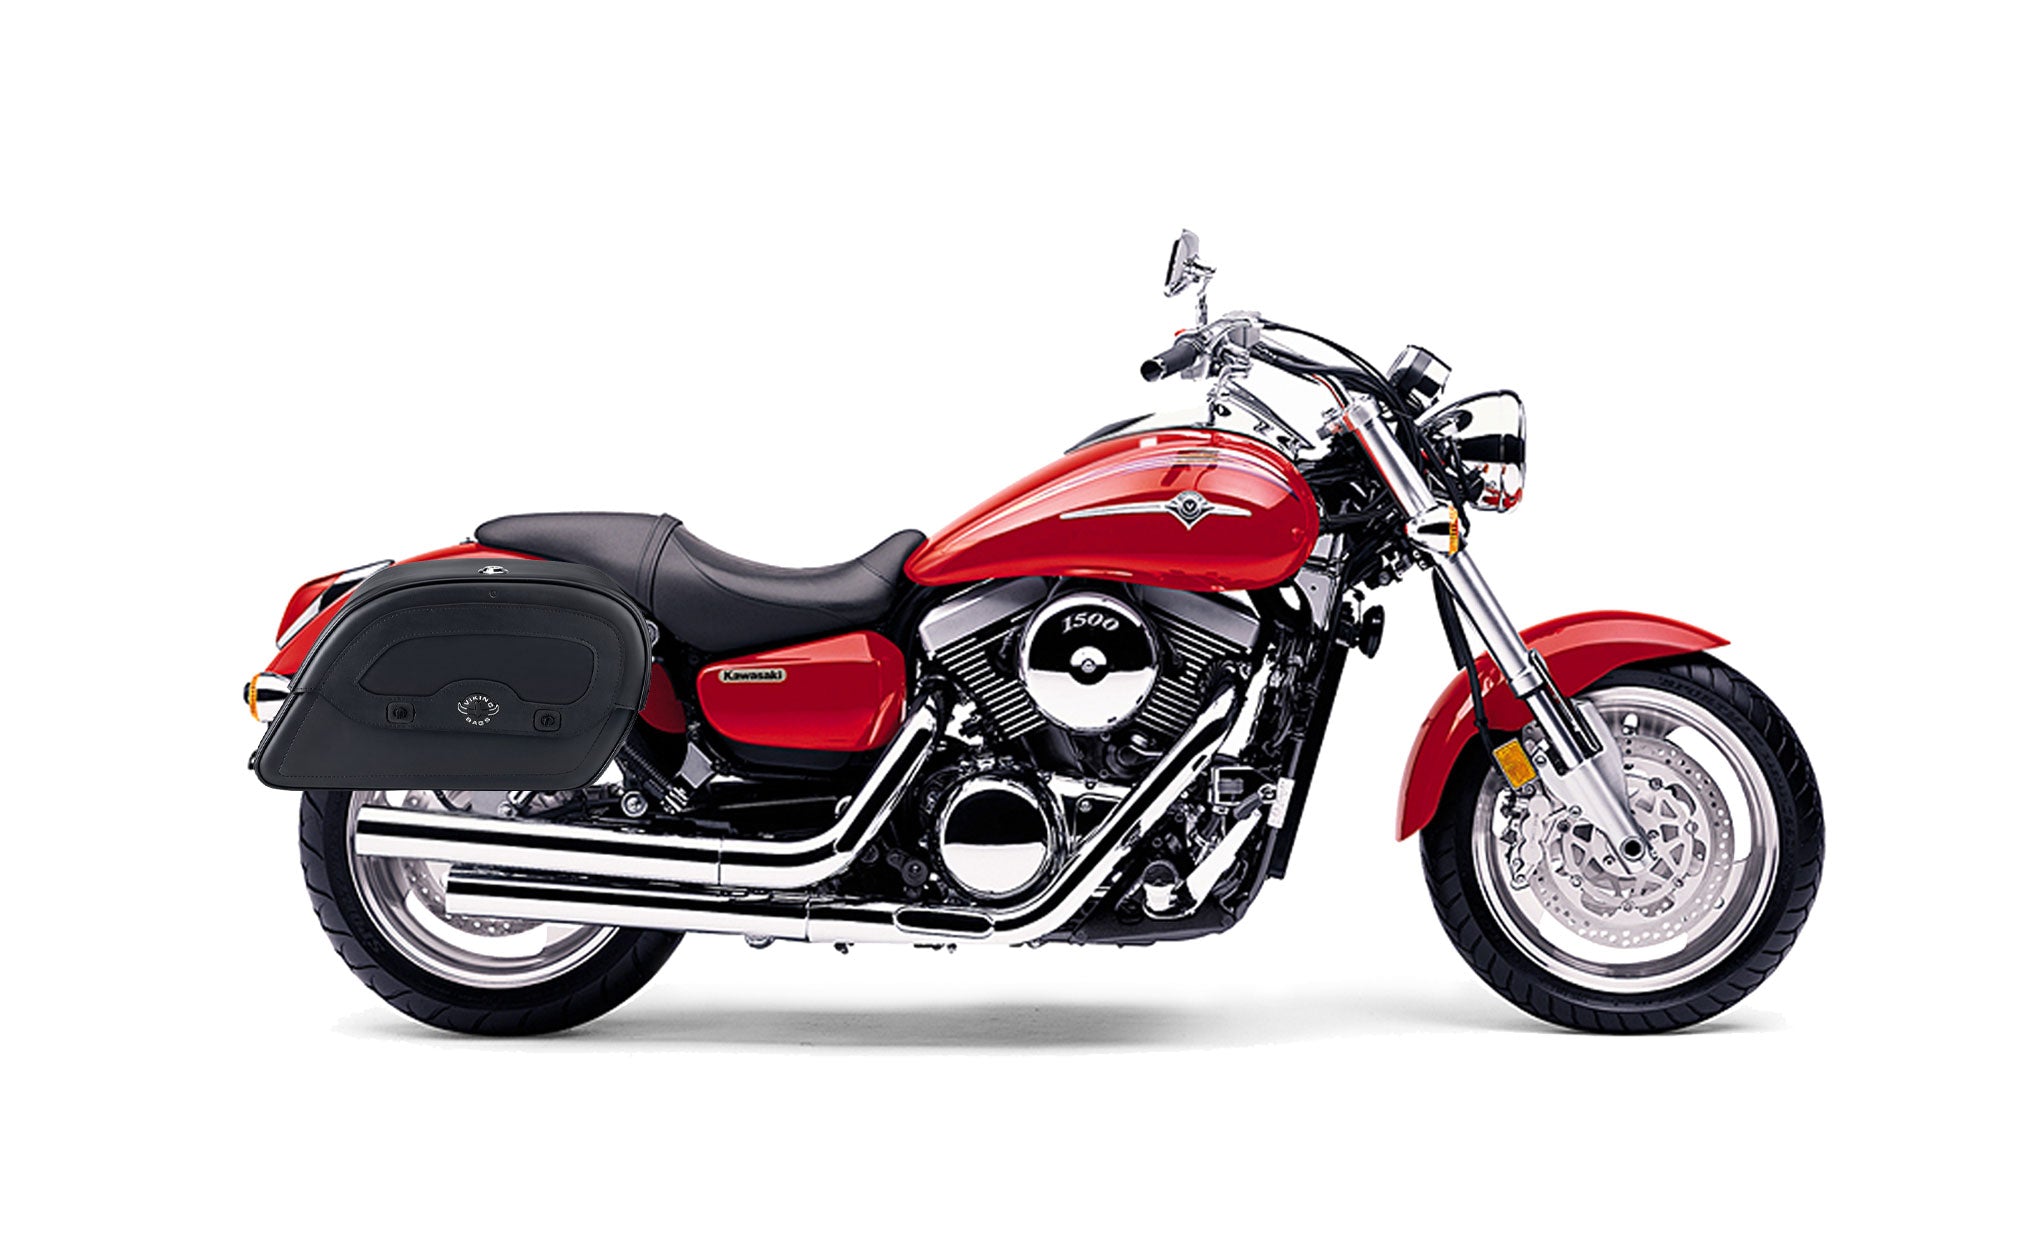 Viking Warrior Large Kawasaki Mean Streak 1500 Leather Motorcycle Saddlebags on Bike Photo @expand